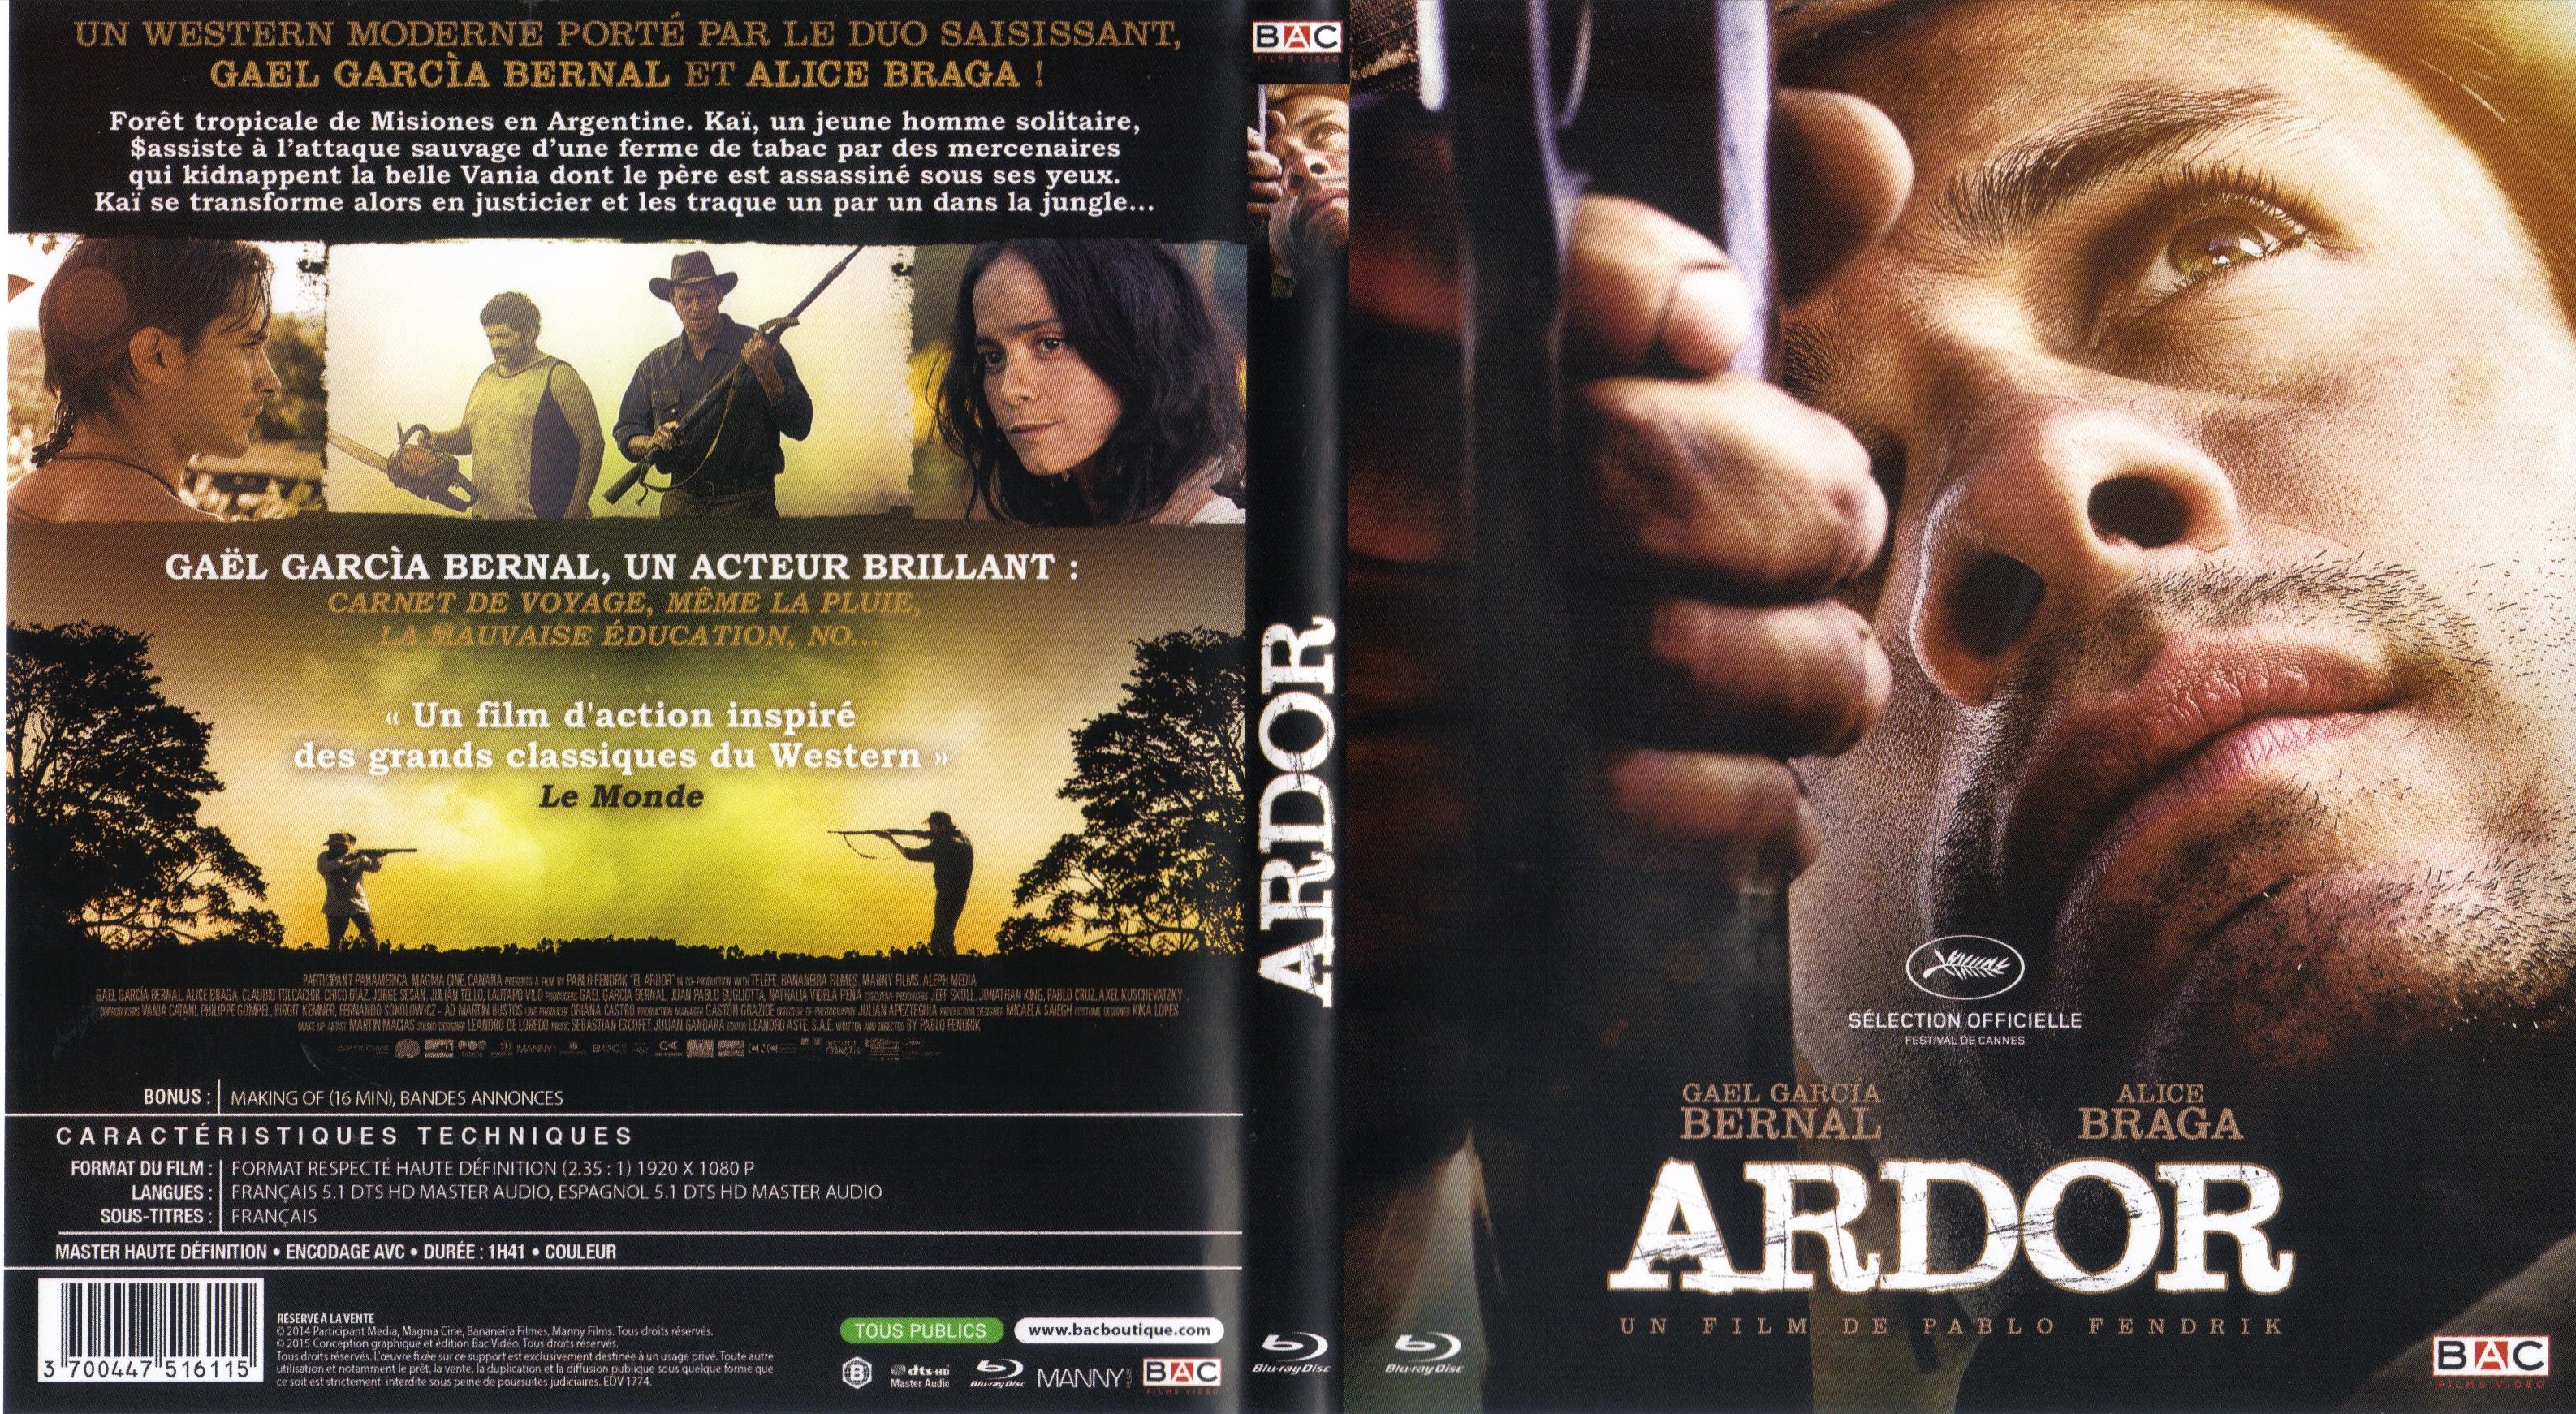 Jaquette DVD Ardor (BLU-RAY)